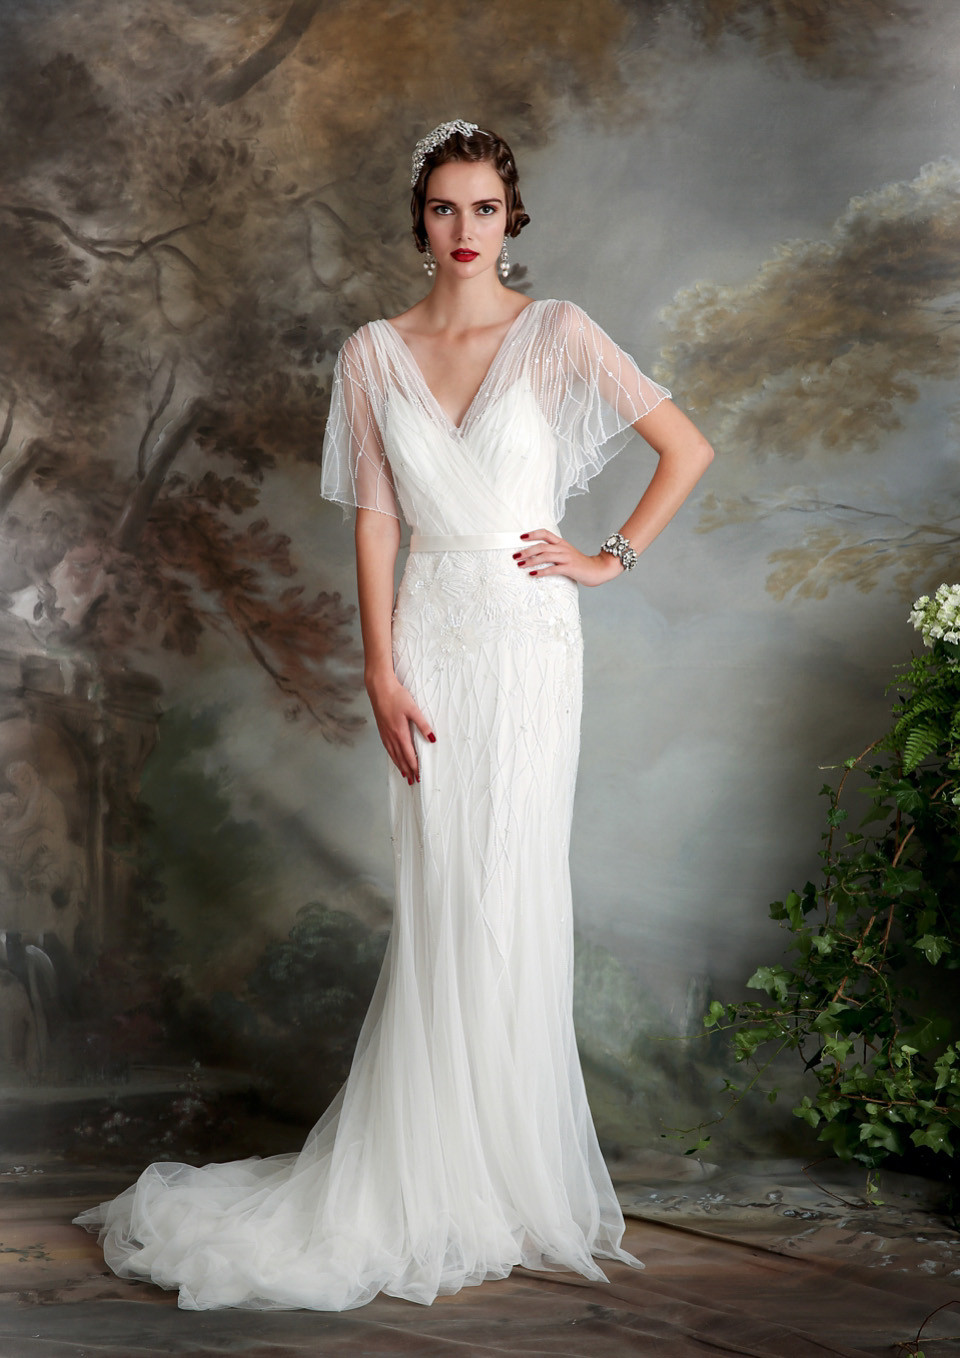 Art Deco Wedding Dress
 Eliza Jane Howell Elegant Art Deco Inspired Wedding